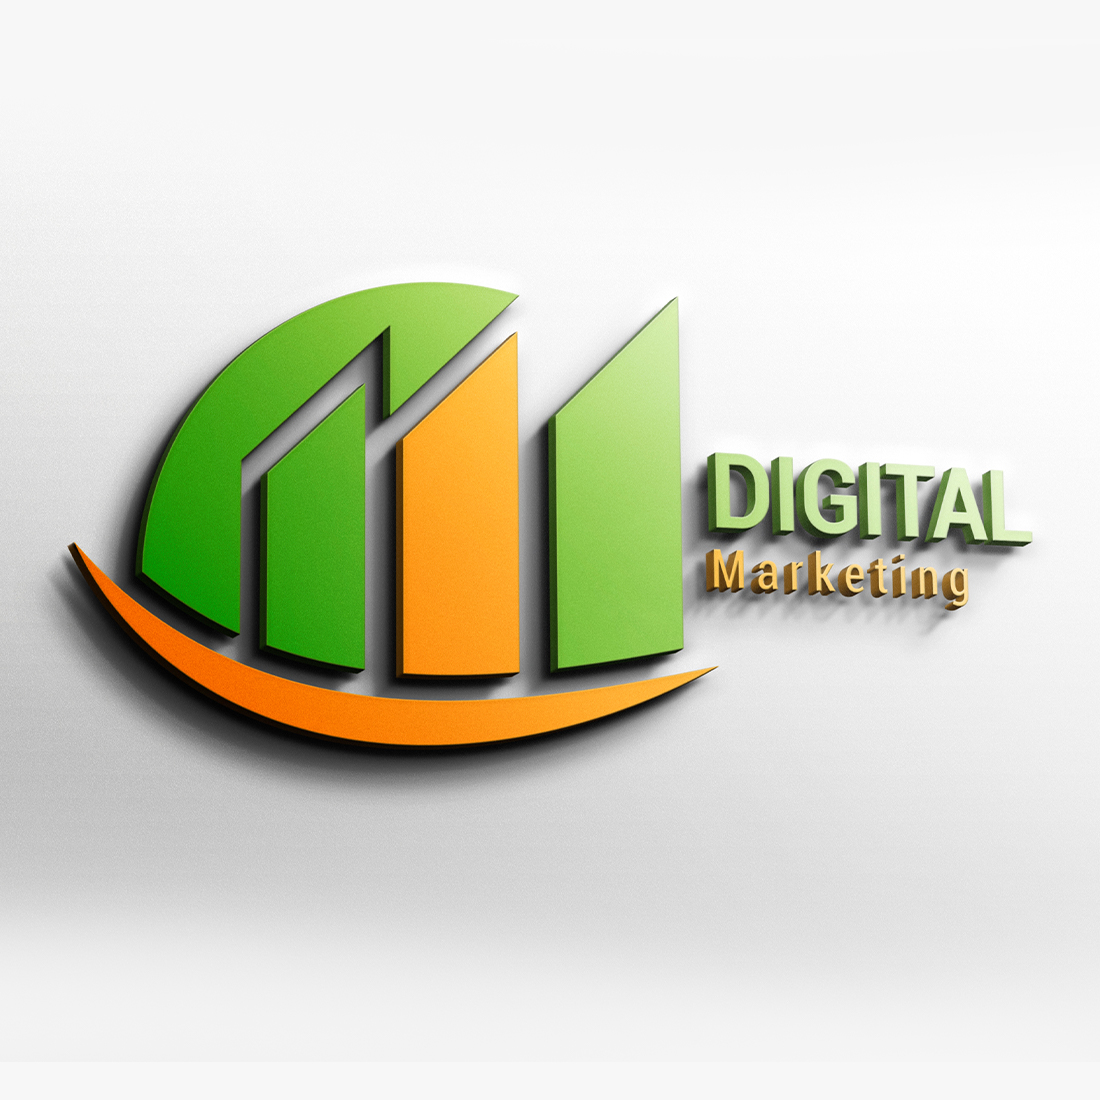 Digital marketing logo design ( txt is easily editable ) preview image.